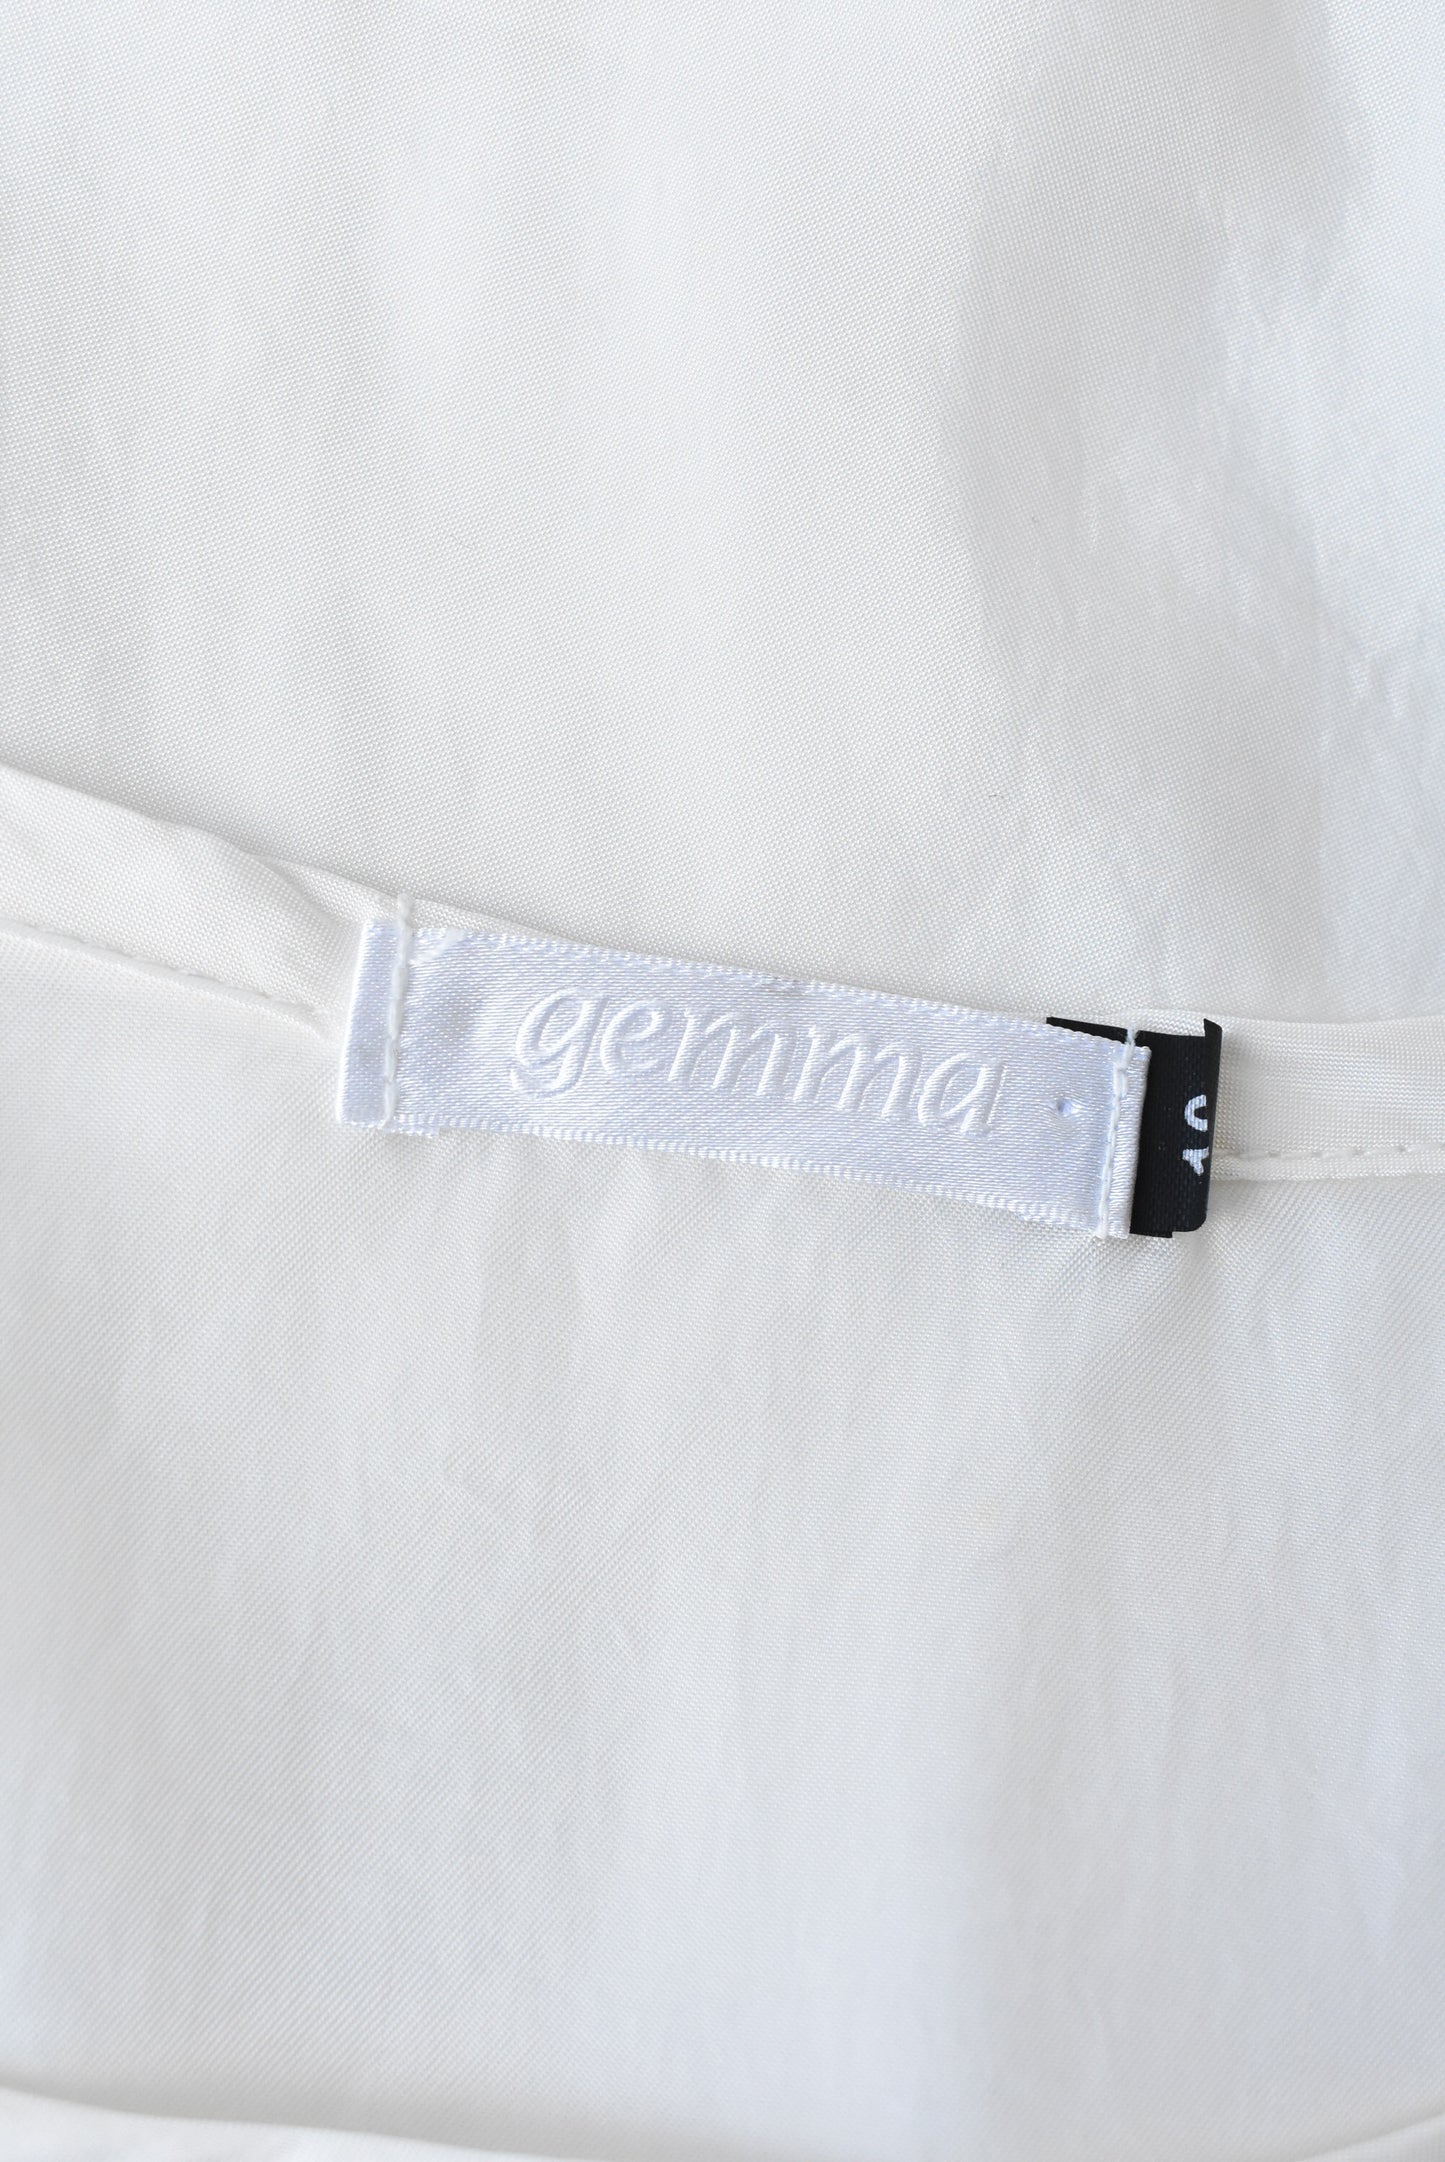 Gemma white flowy cuffed sleeve top, size 10